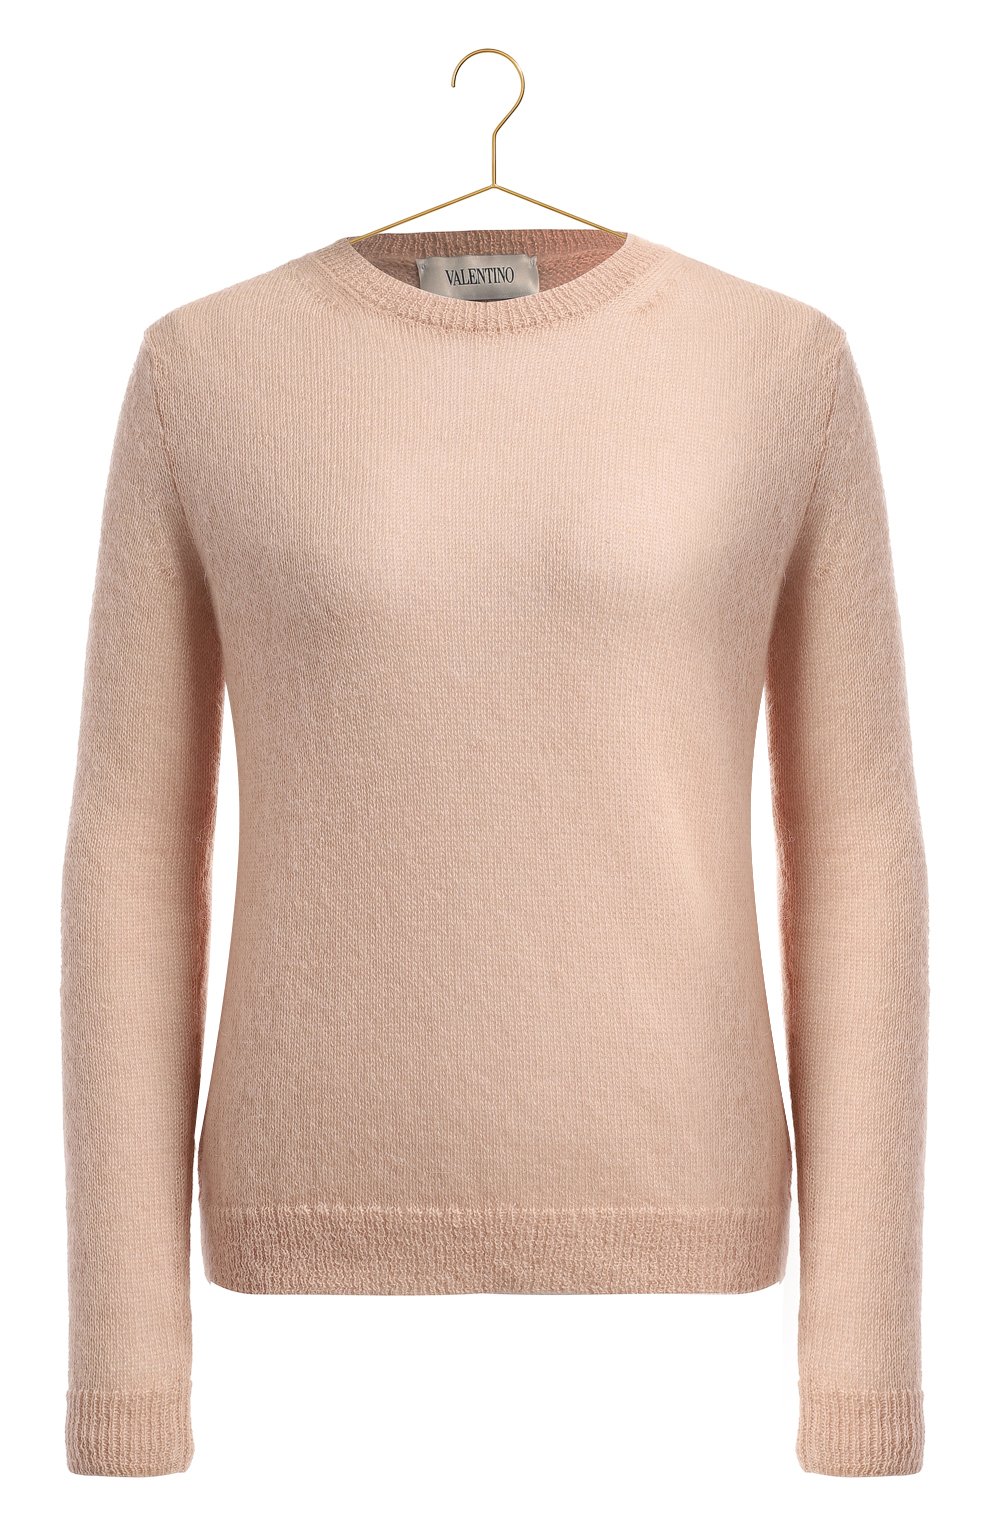 Шерстяной пуловер | Valentino | Розовый - 1